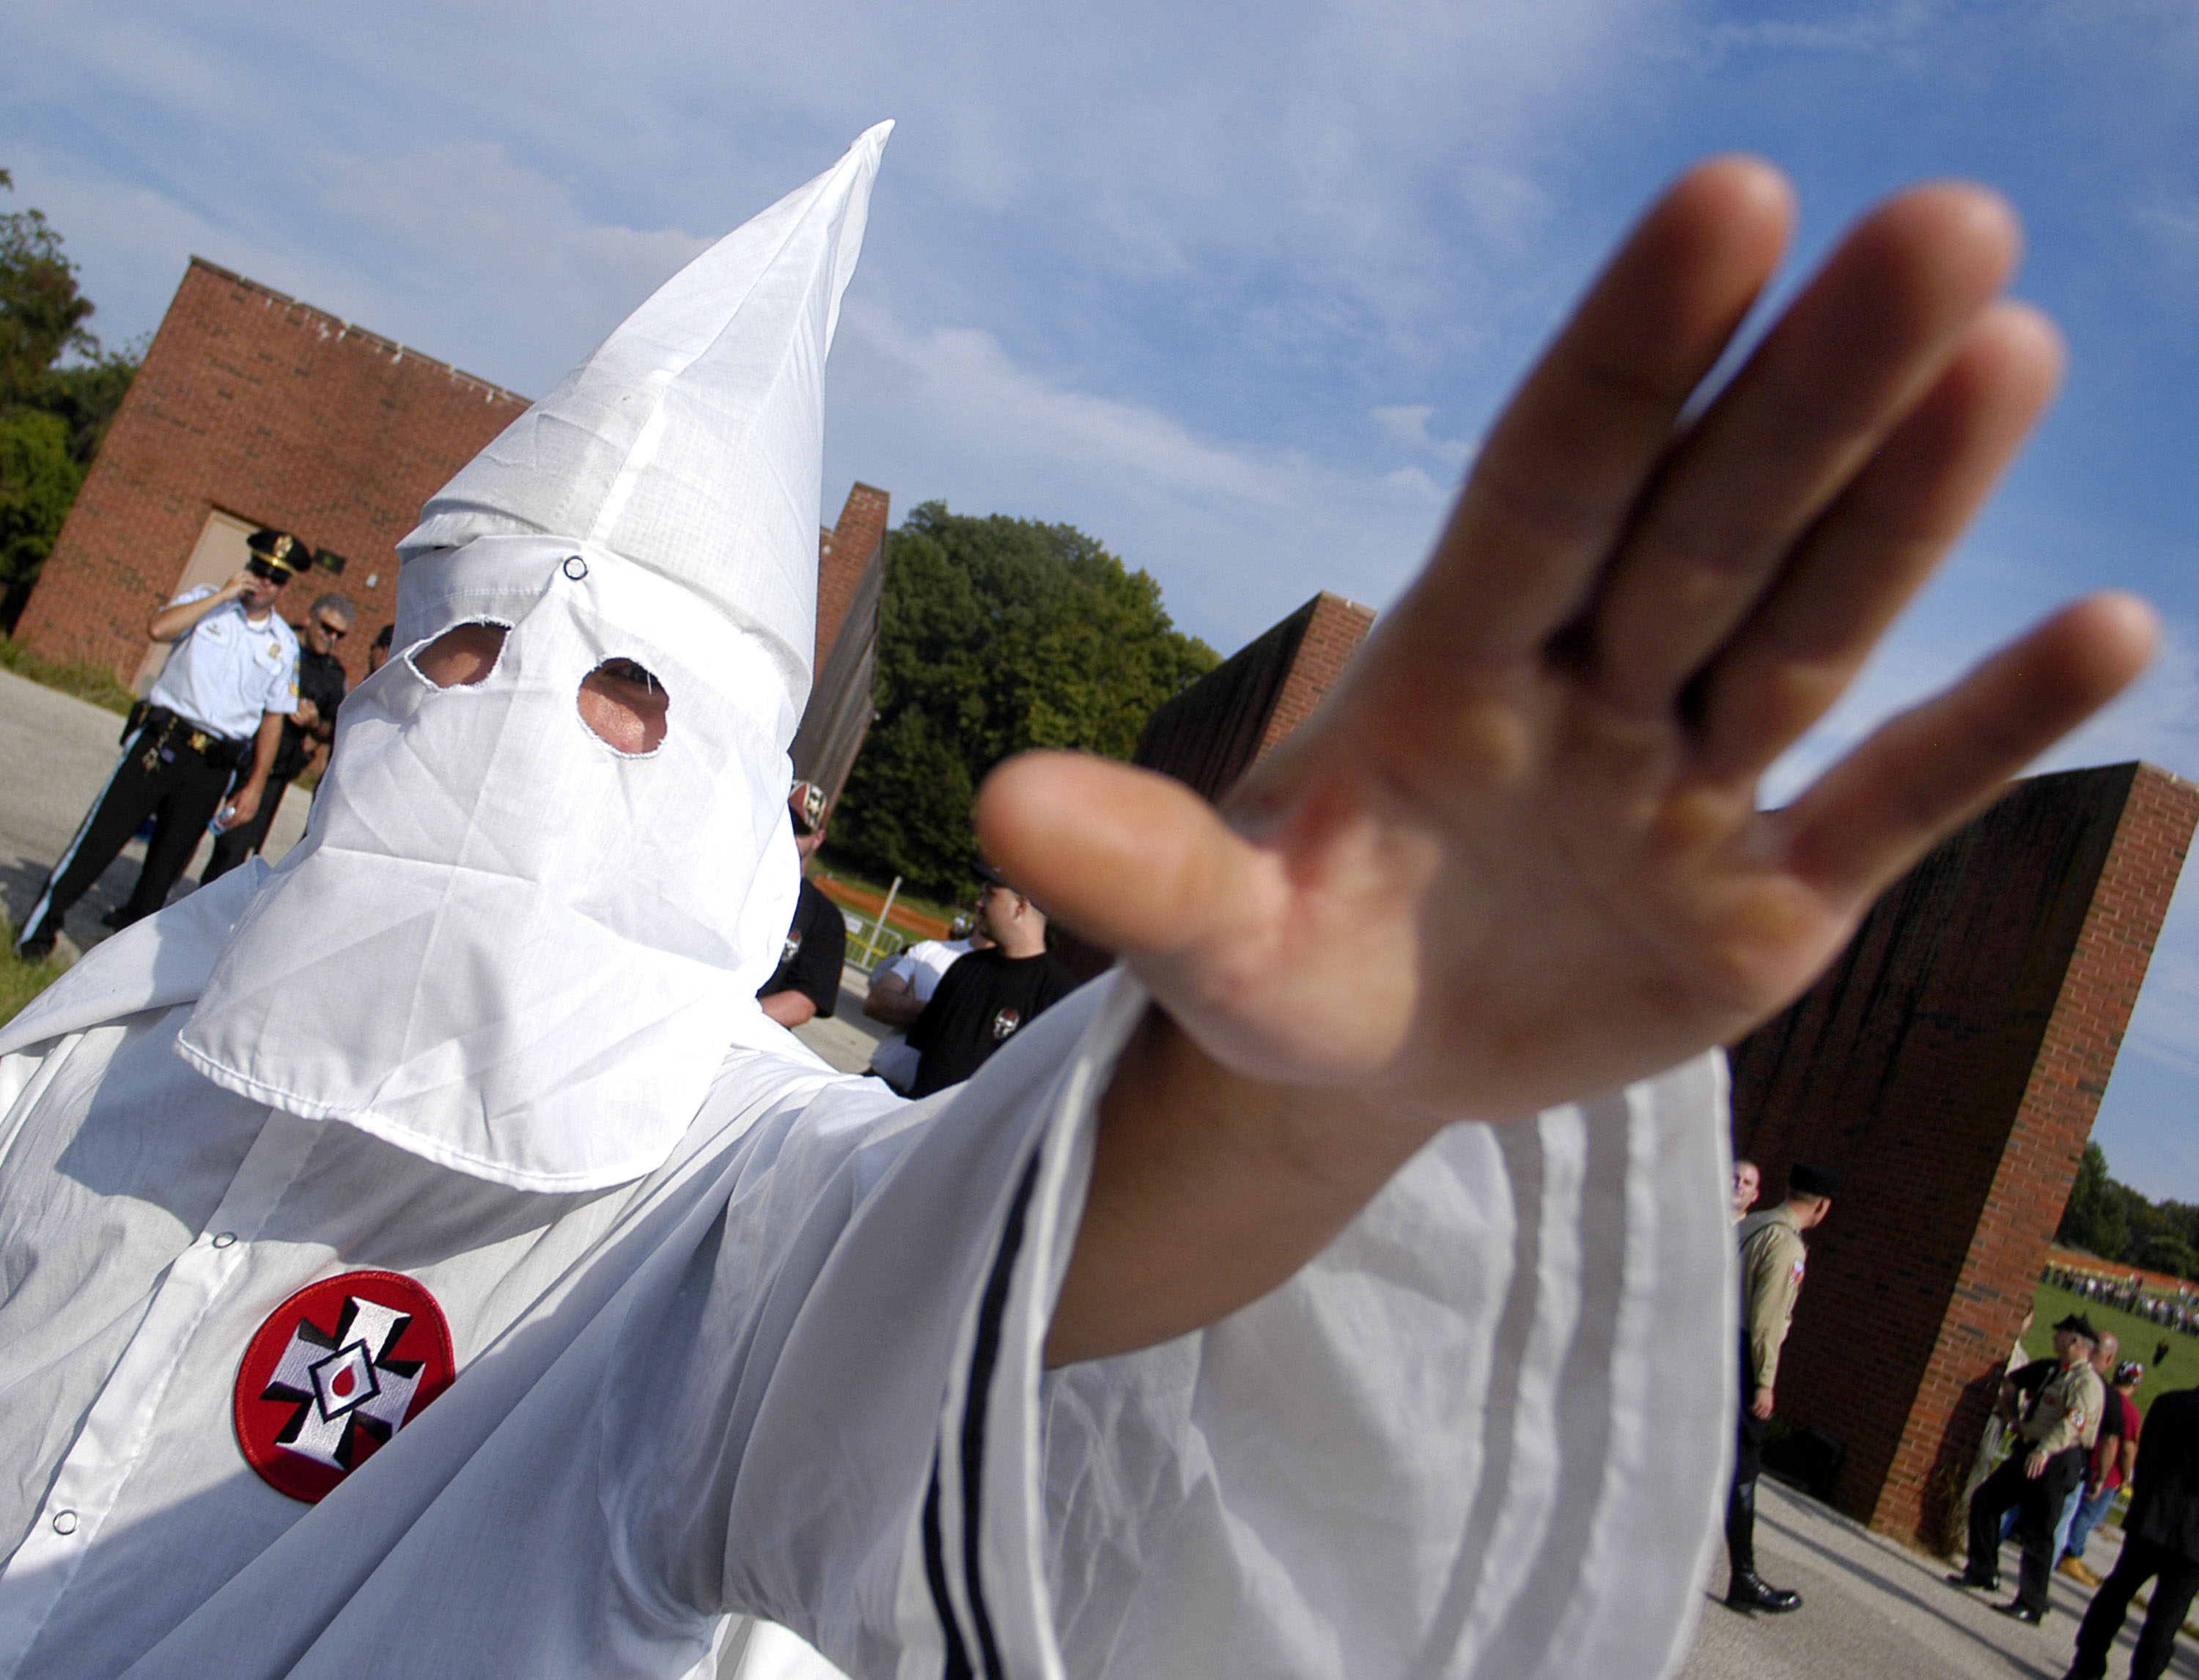 The Kkk Today Disturbing Photos Of The Modern Day Ku Klux Klan